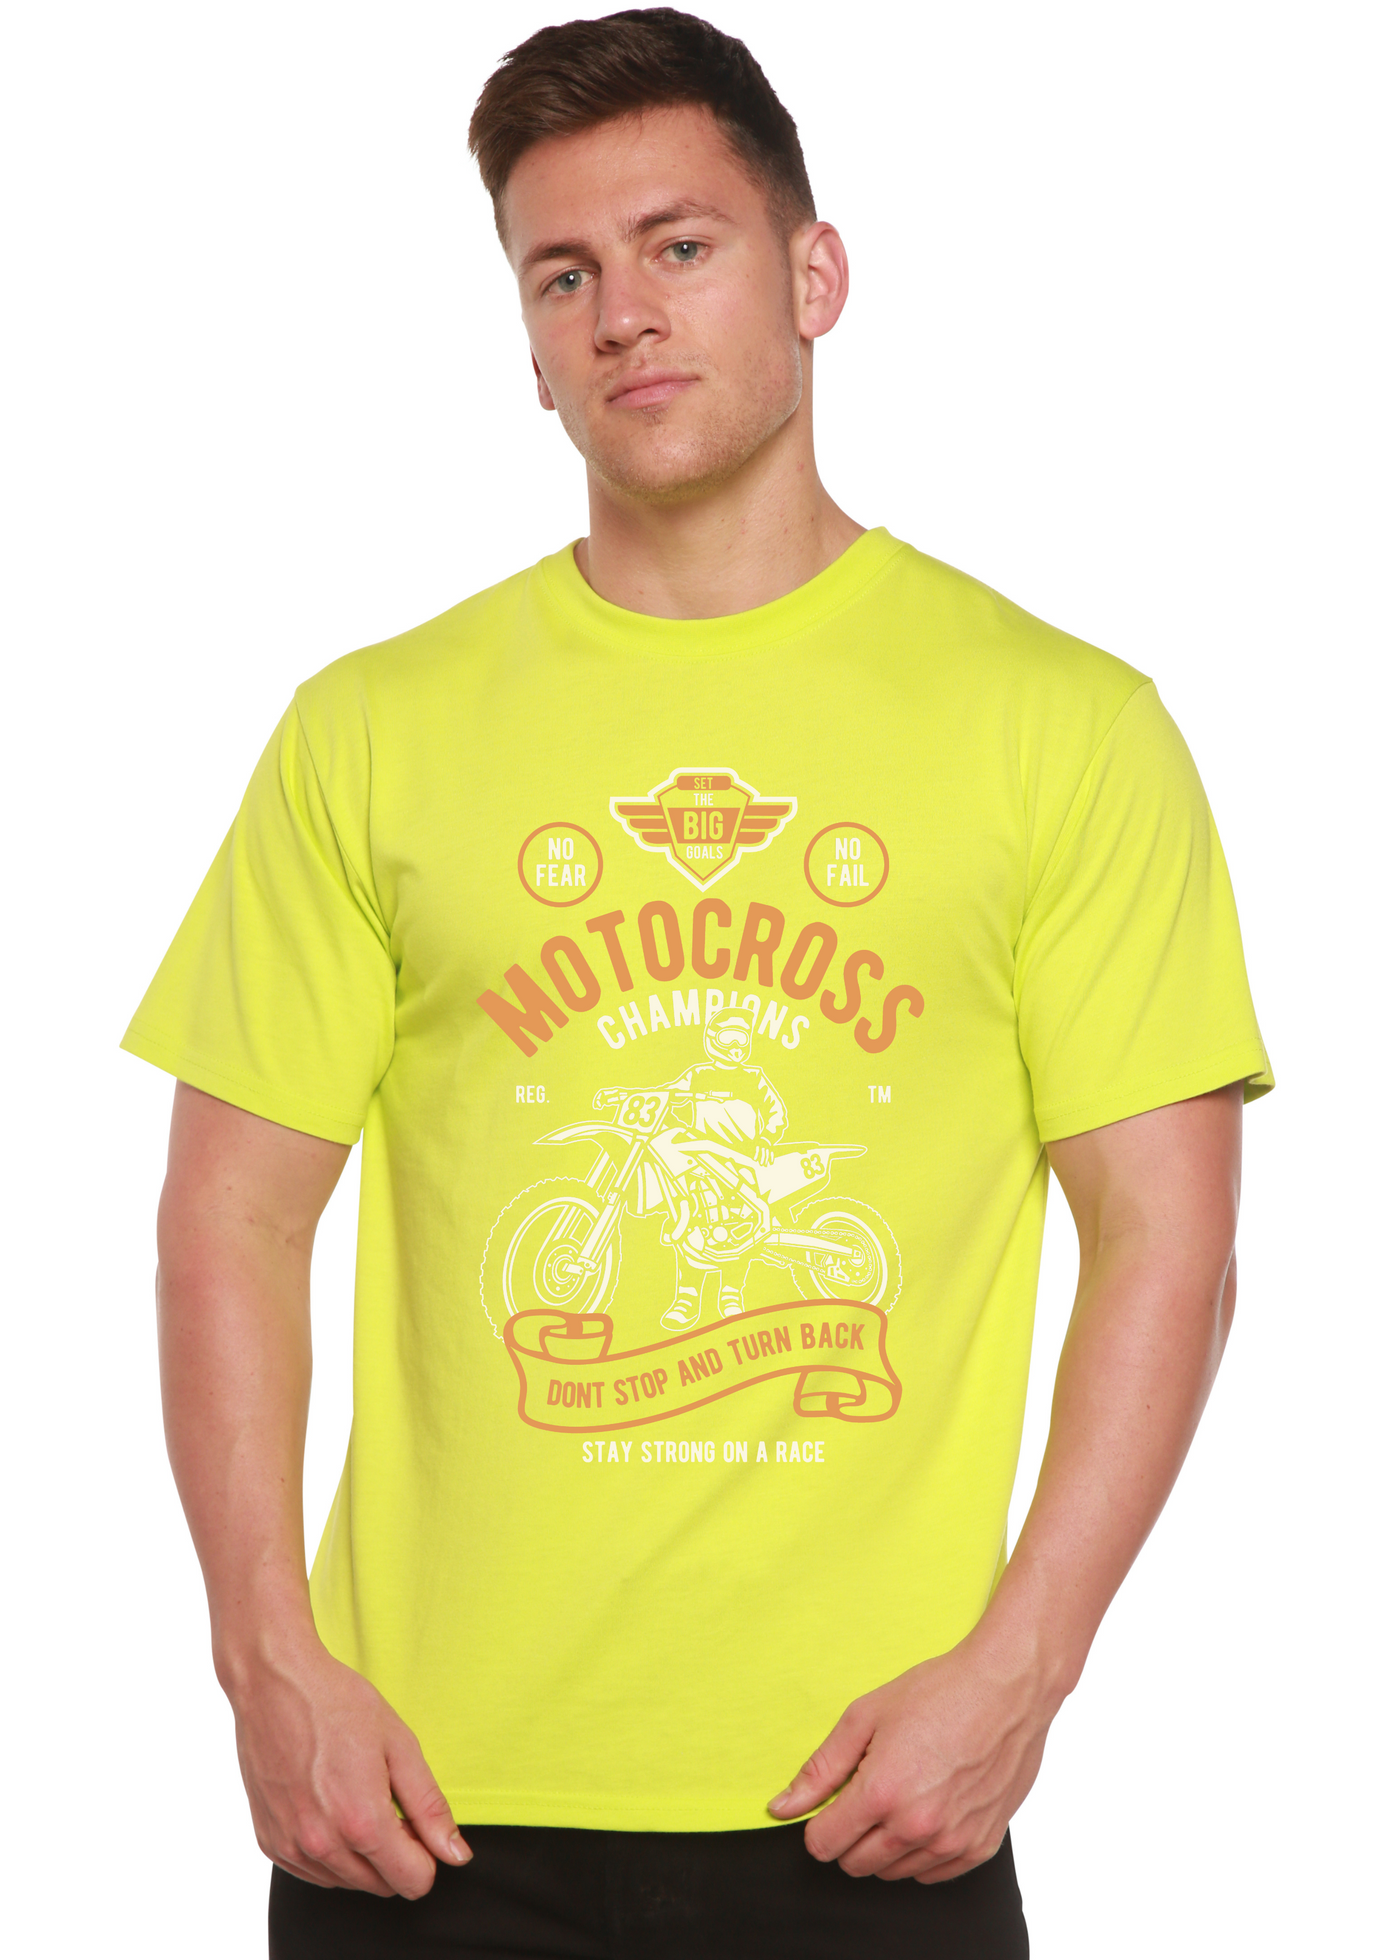 Motocross Champions men's bamboo tshirt lime punch